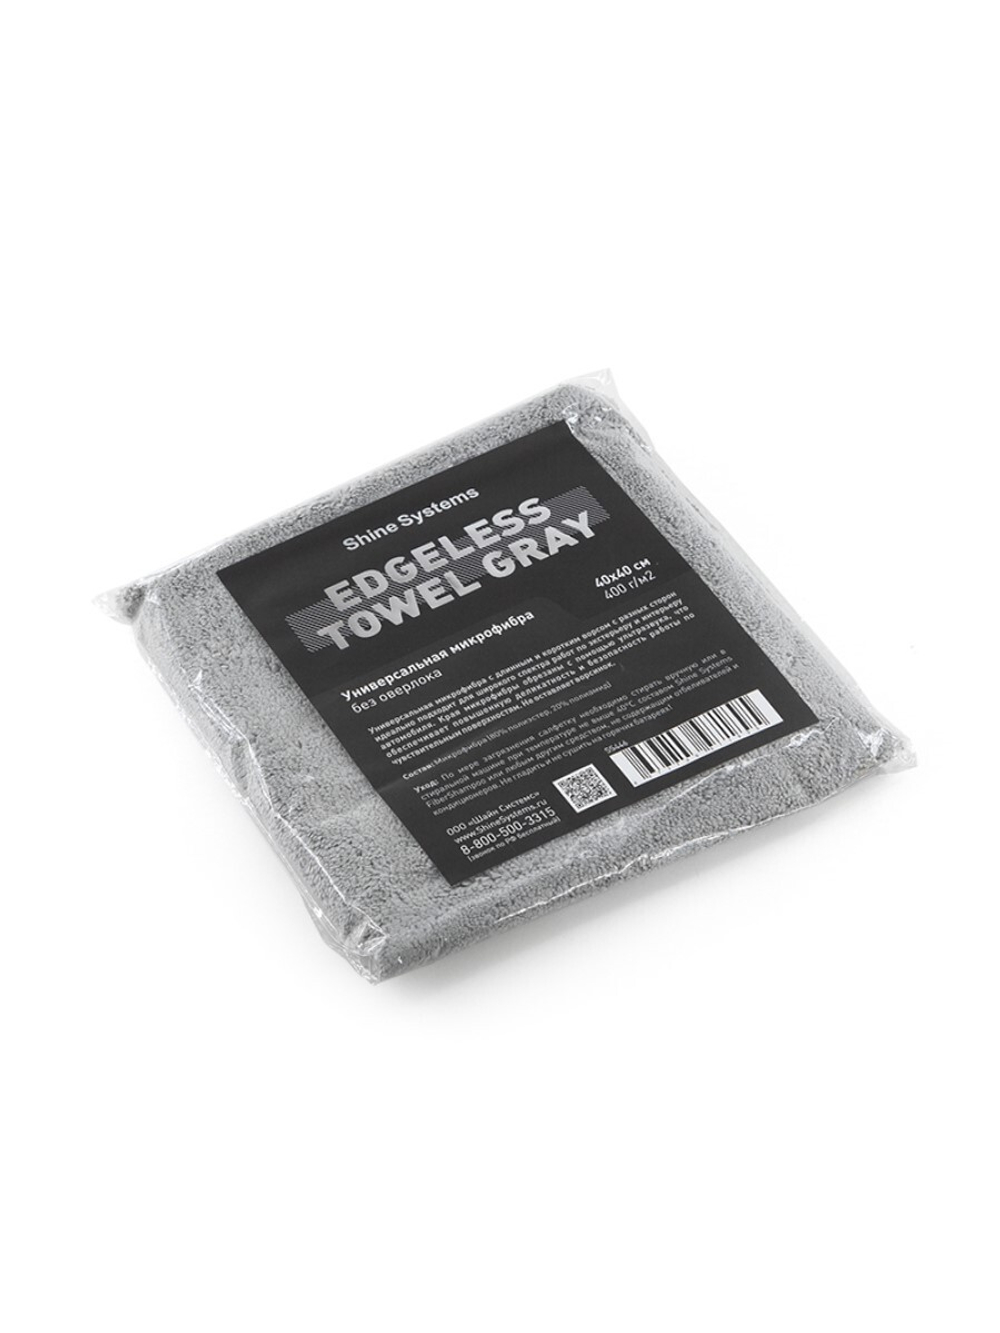 Shine Systems Edgeless Towel Gray – универсальная микрофибра без оверлока 40*40см, 400гр/м2, серая